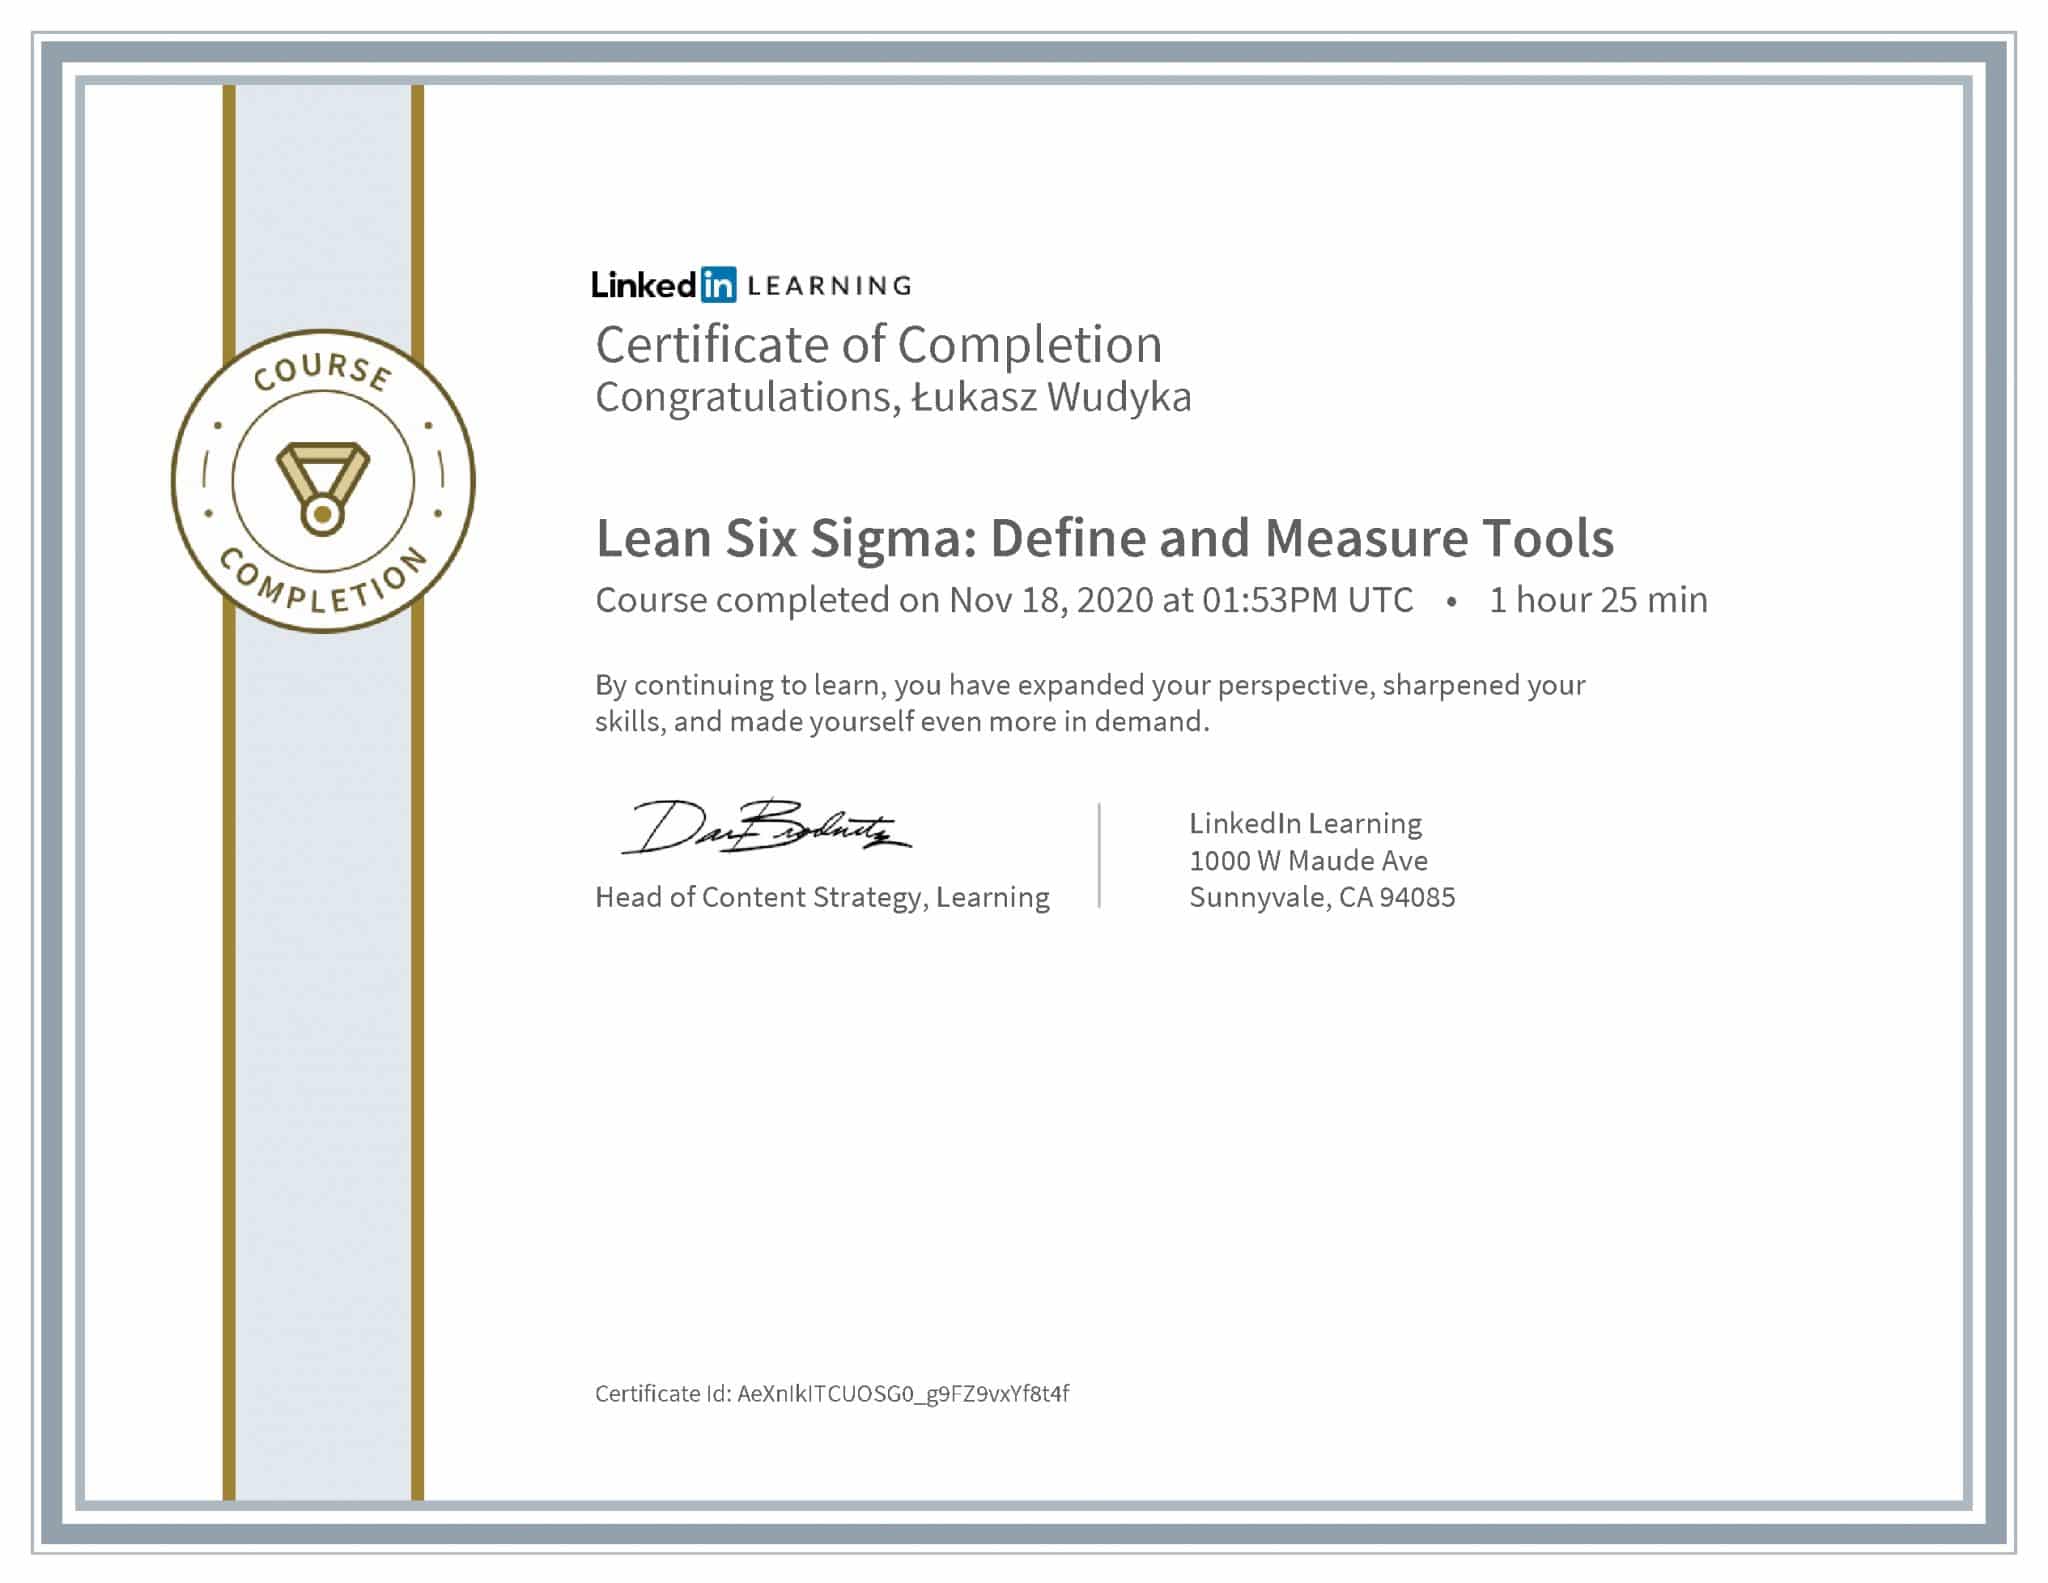 Łukasz Wudyka certyfikat LinkedIn Lean Six Sigma: Define and Measure Tools